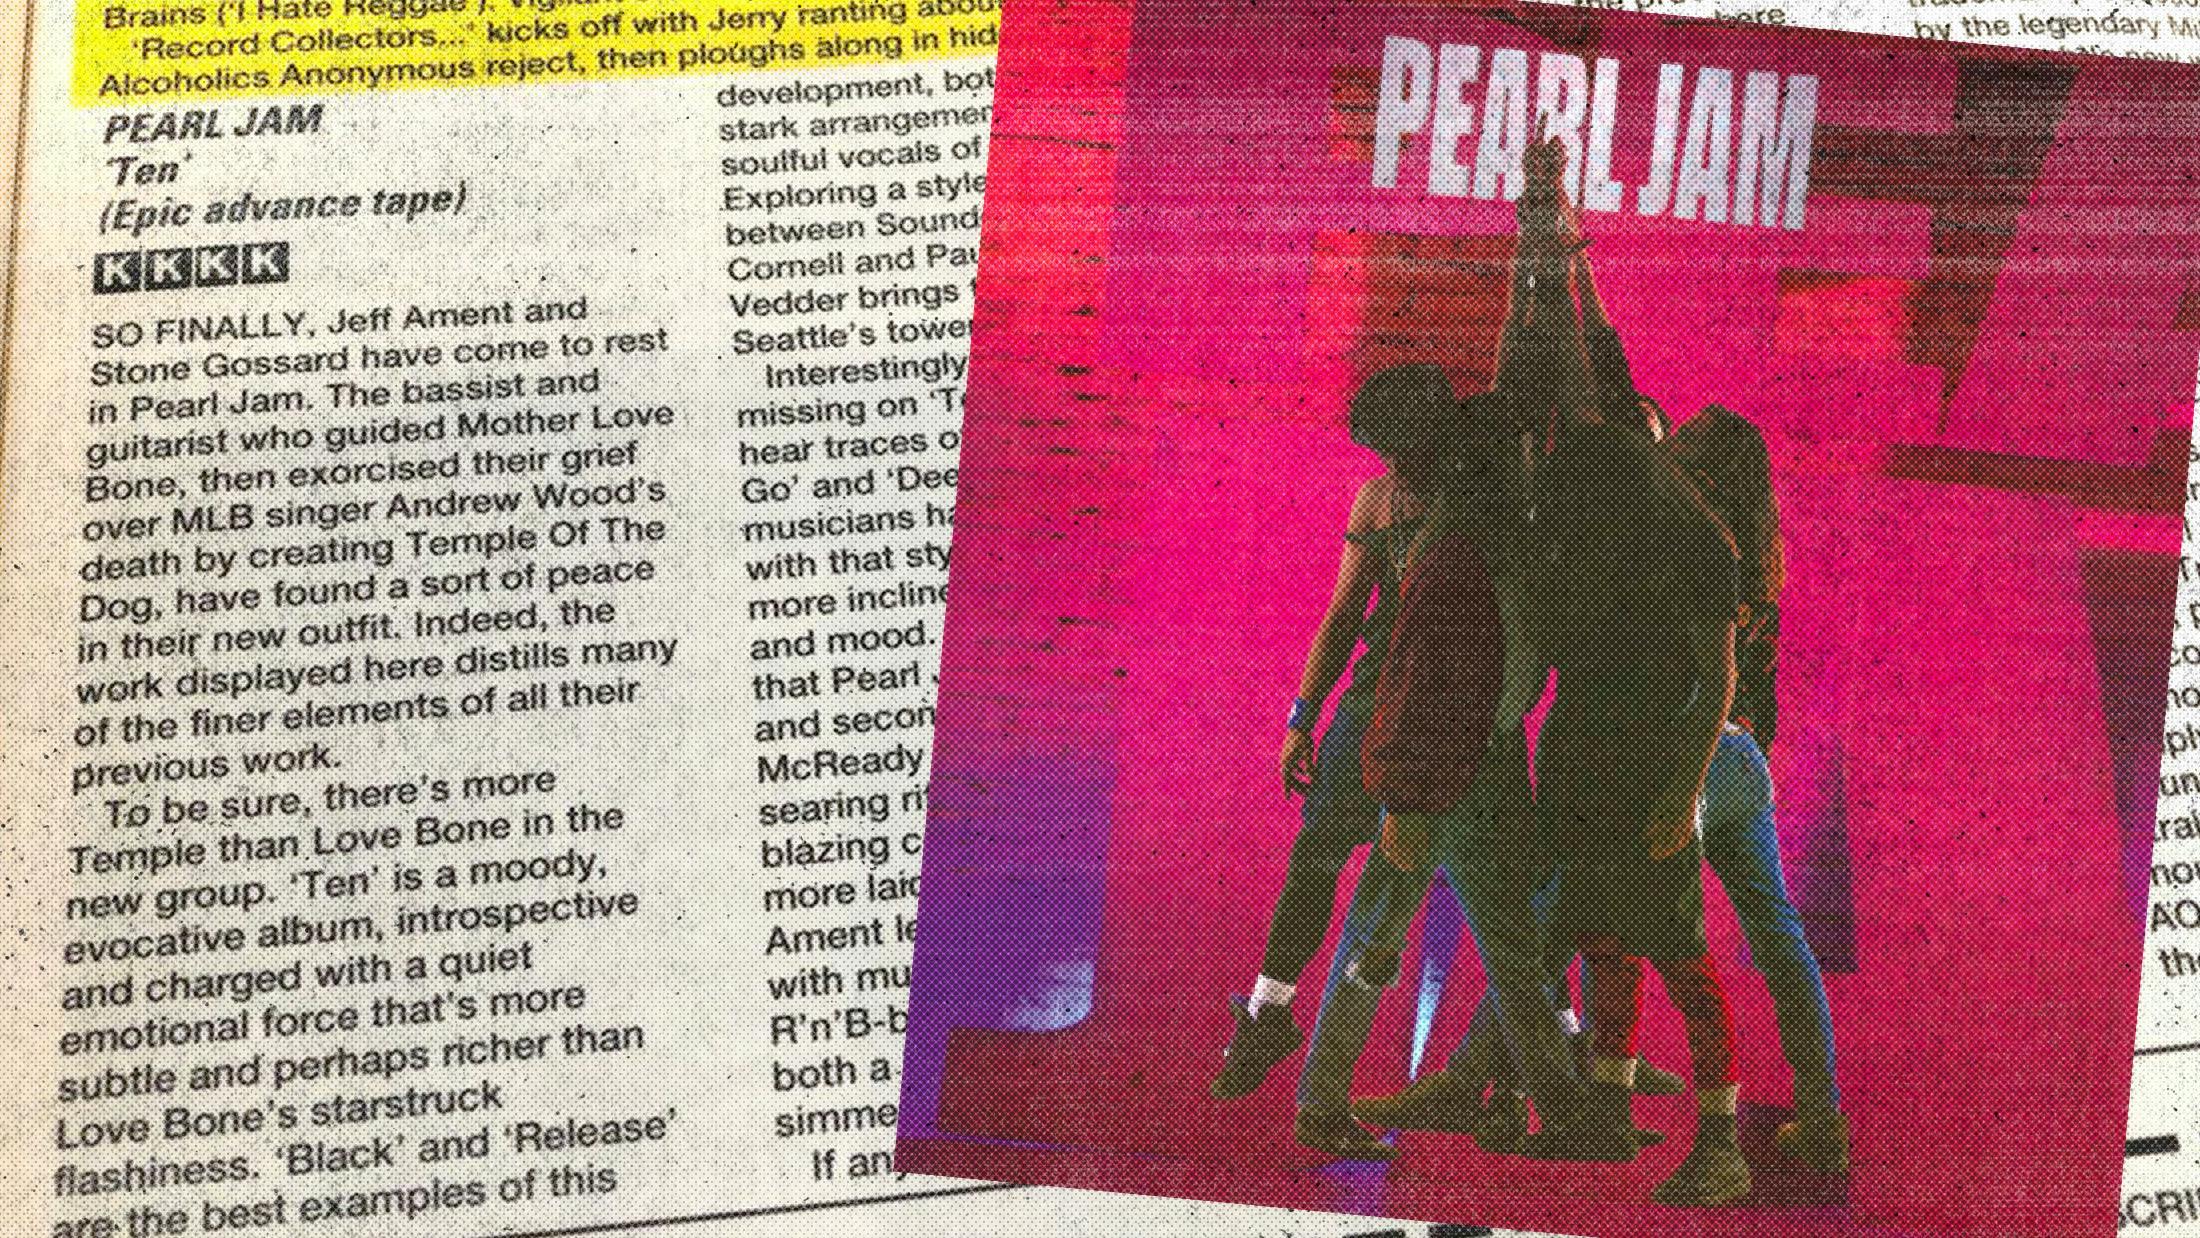 "A moody, evocative album…": Our original review of Pearl Jam's debut Ten